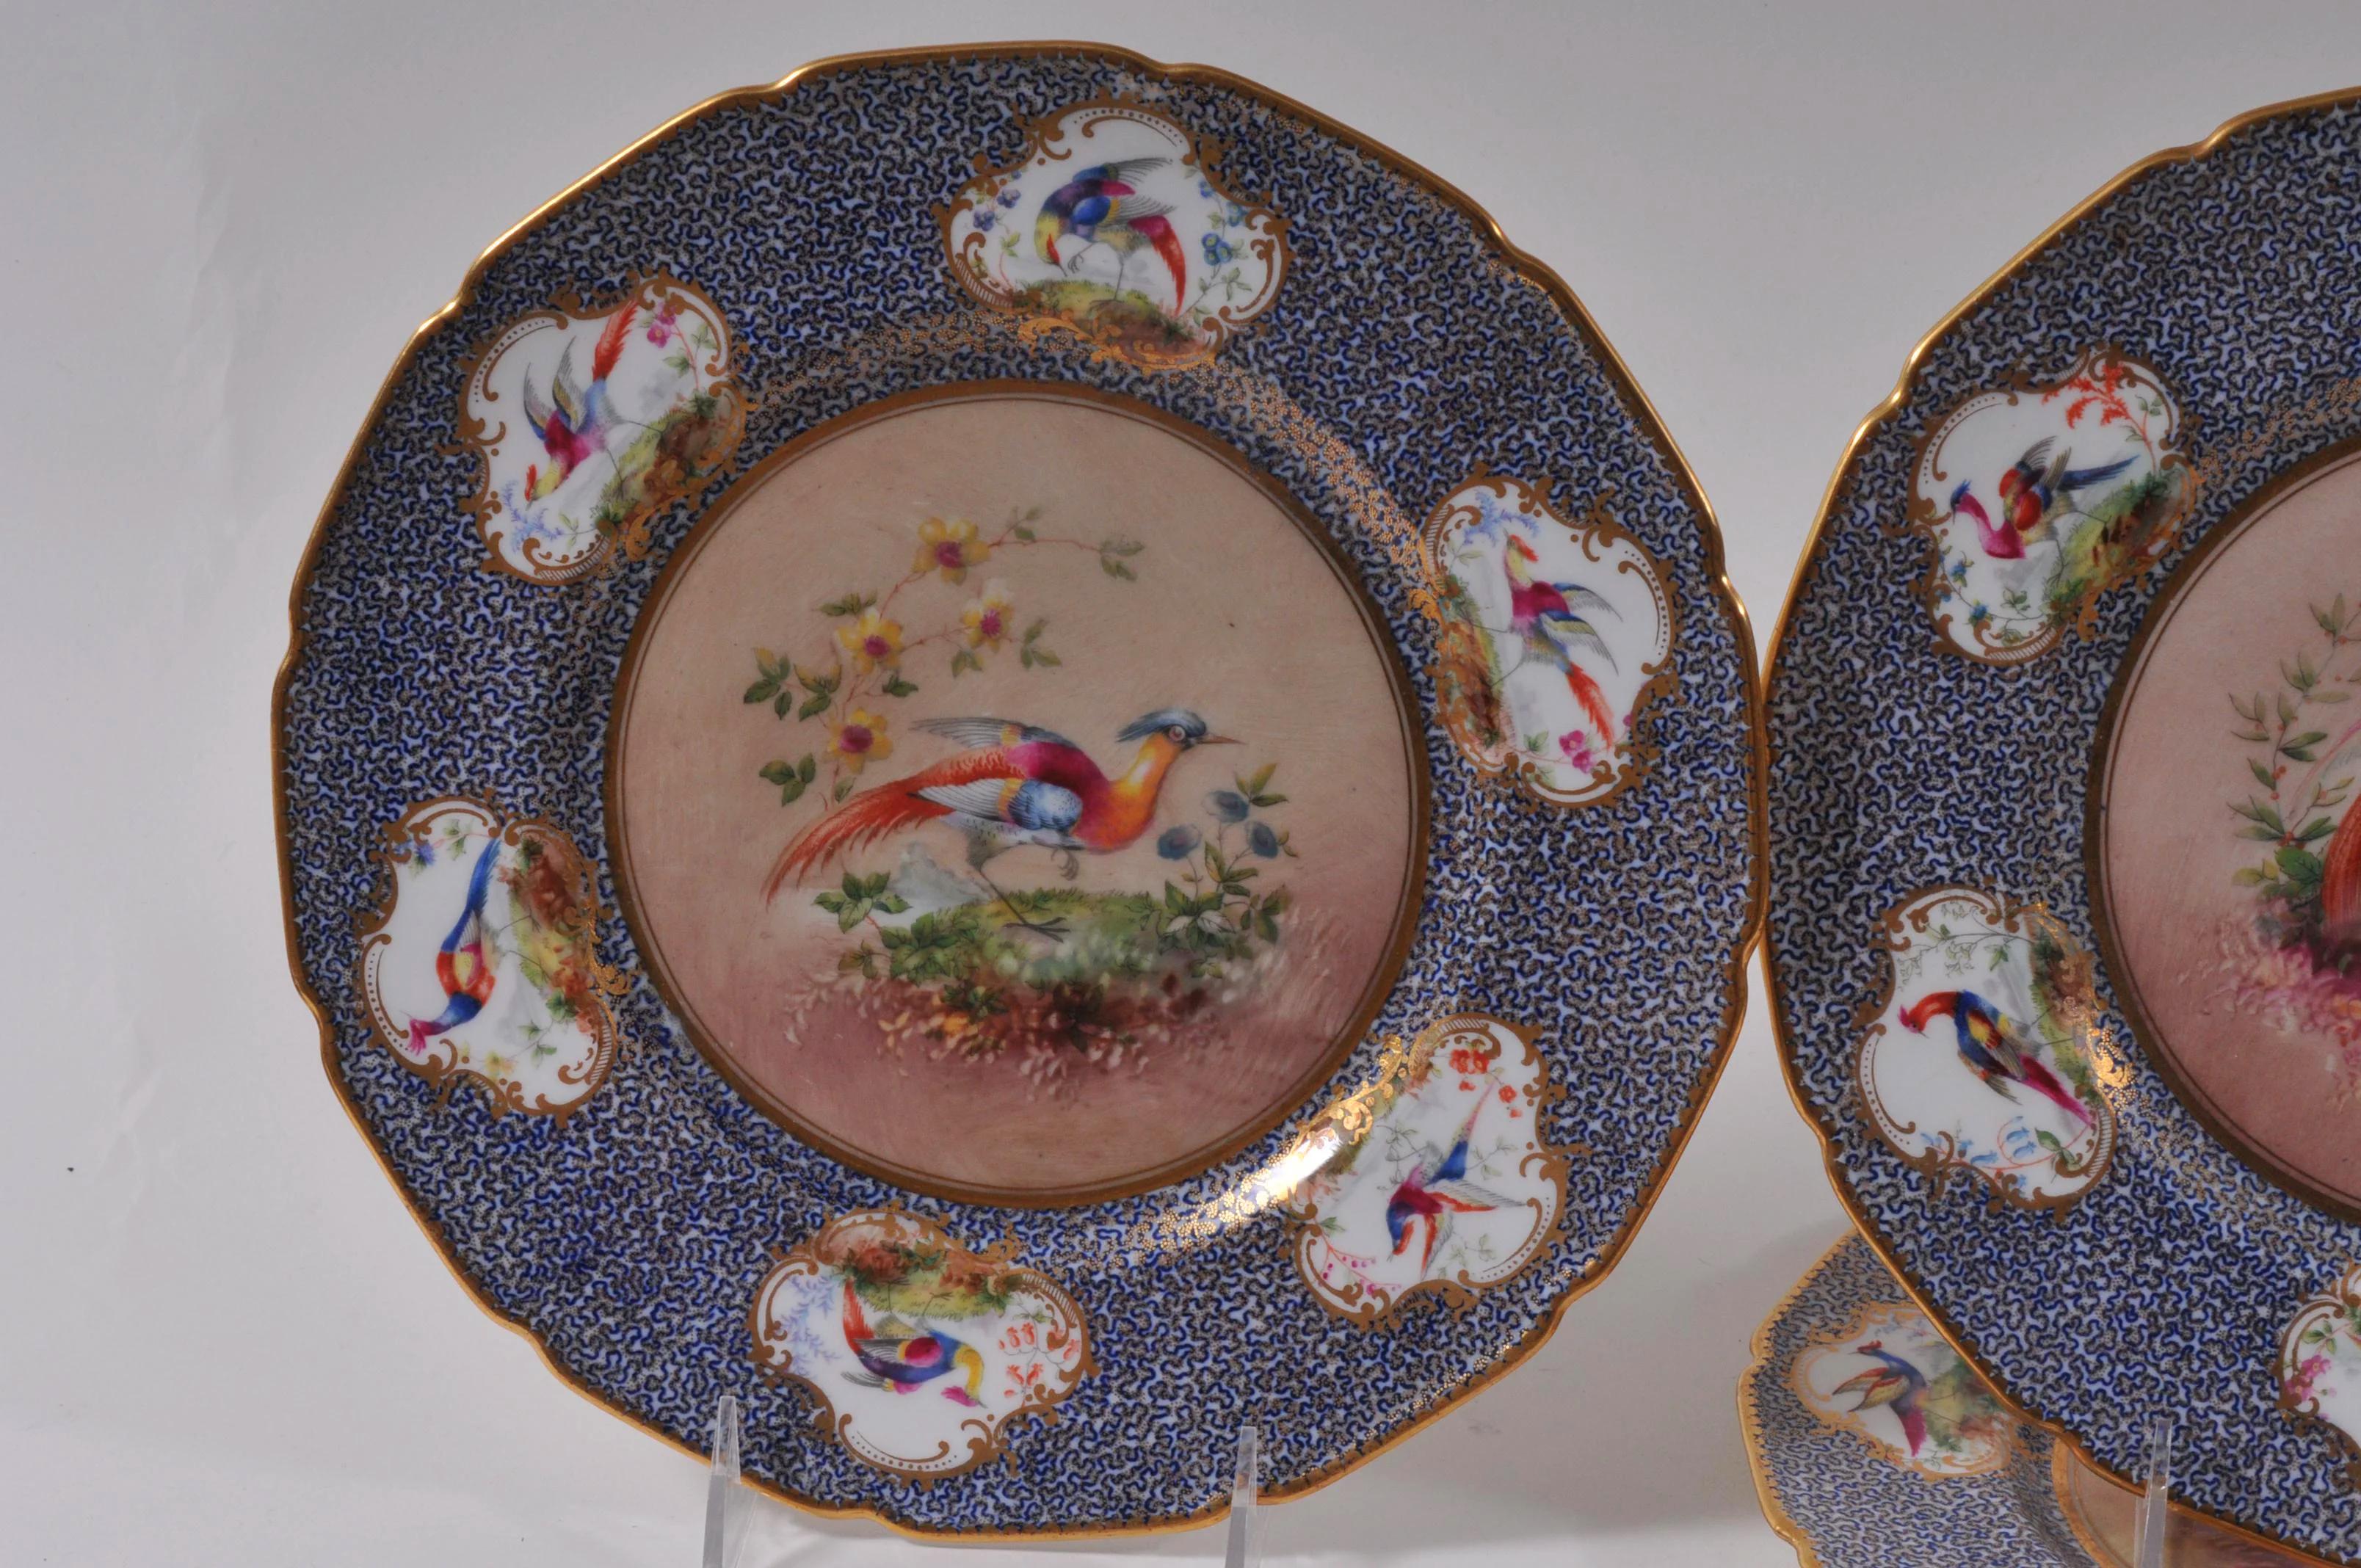 Late Victorian Set of 12 Royal Doulton Porcelain Plates Depicting Game Birds